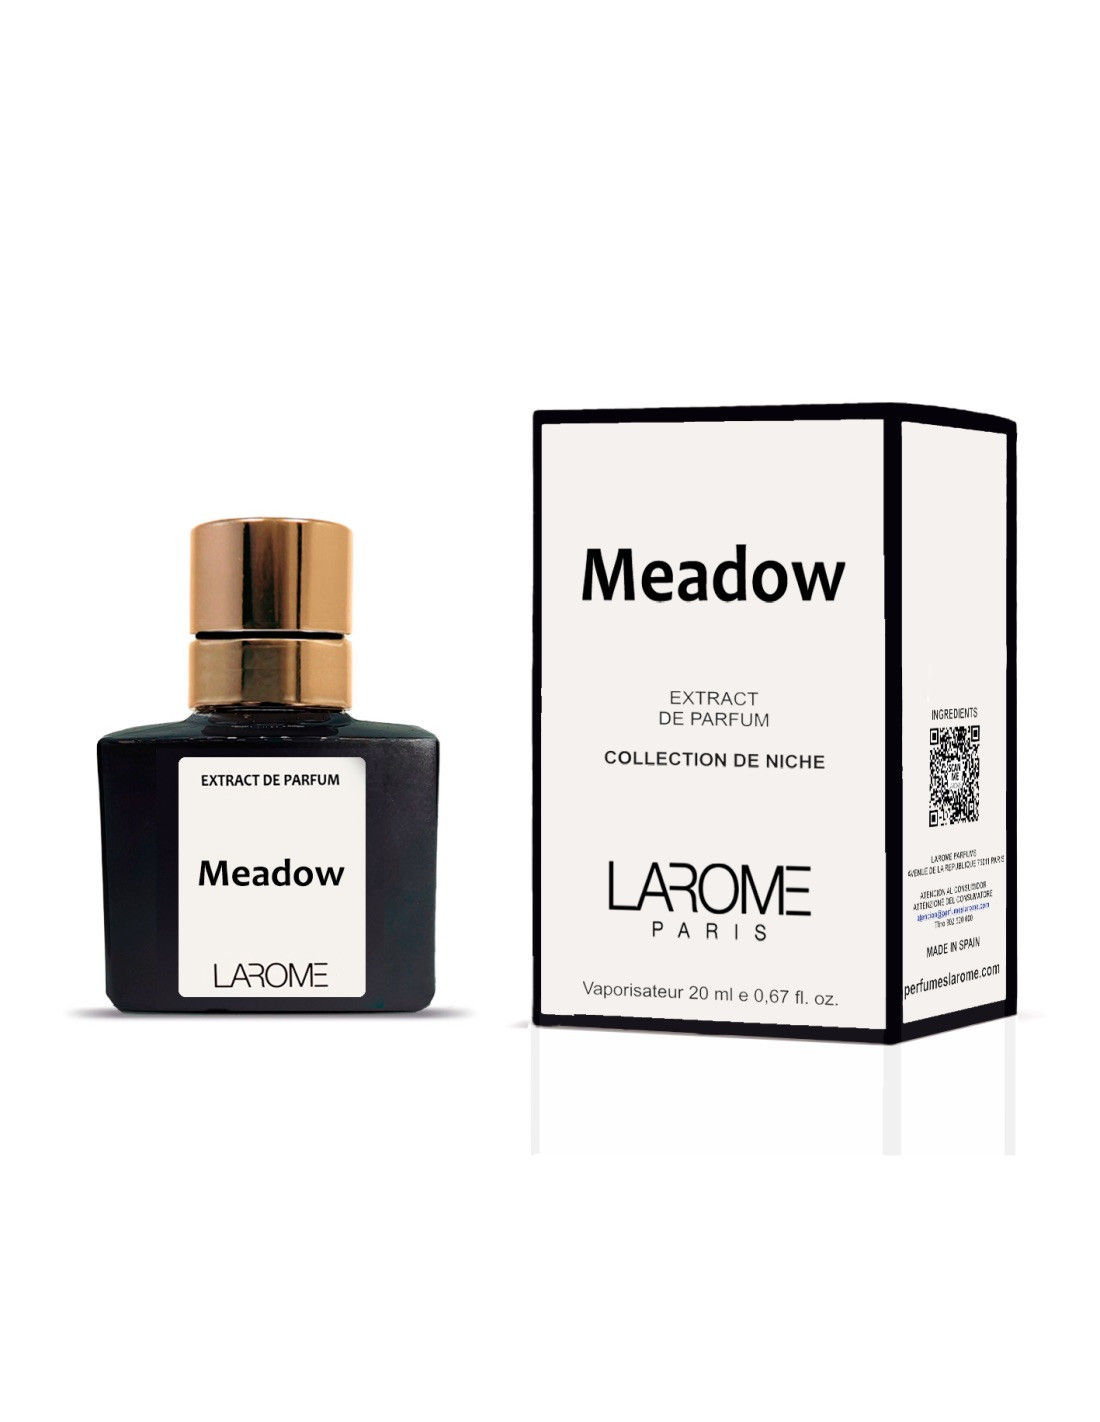 LAROME Paris - Meadow - Extract de Parfum Varianta: 100ml